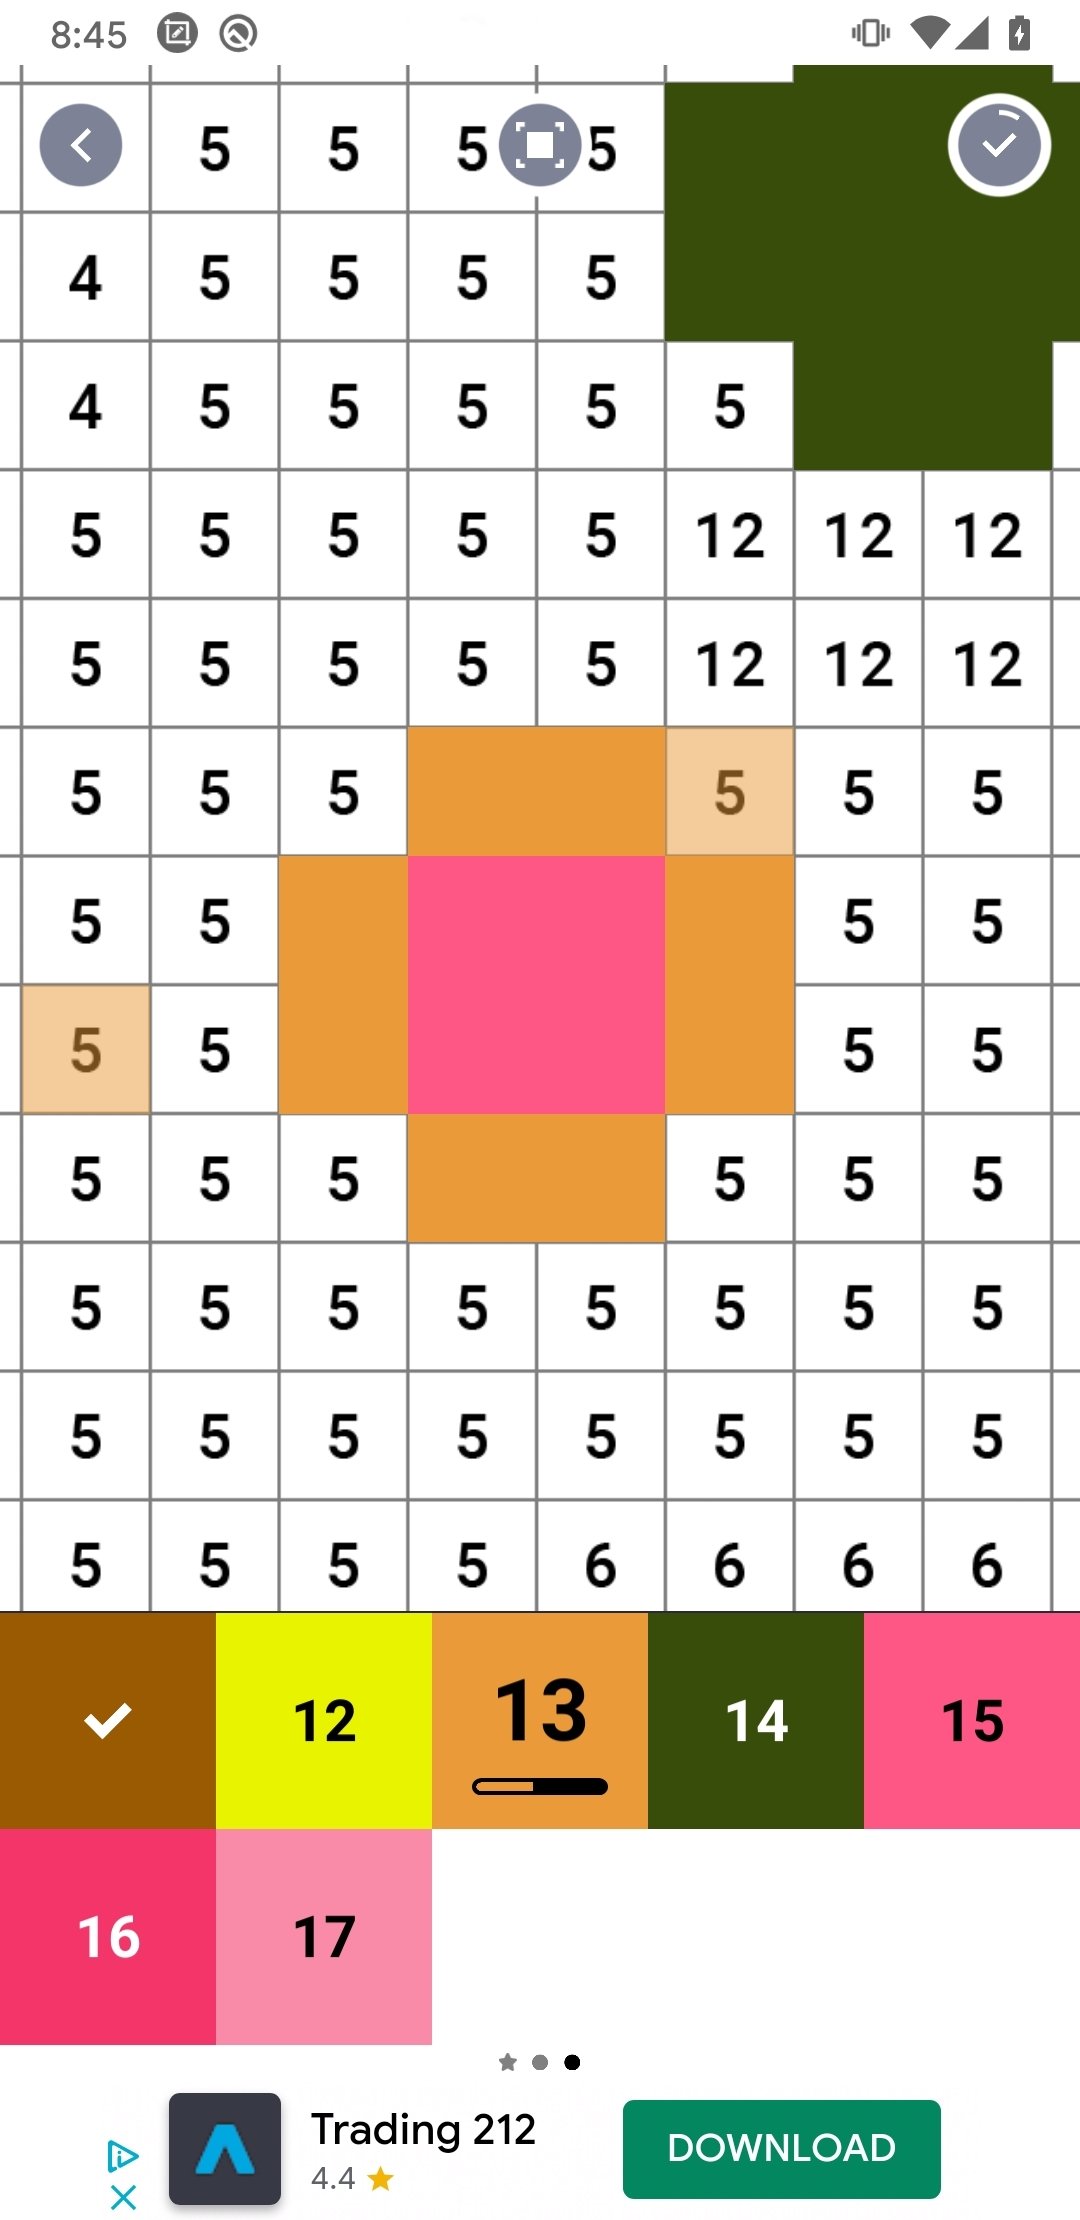 Download do APK de Pintar com Números - Pixel Art Livro de Colorir para  Android